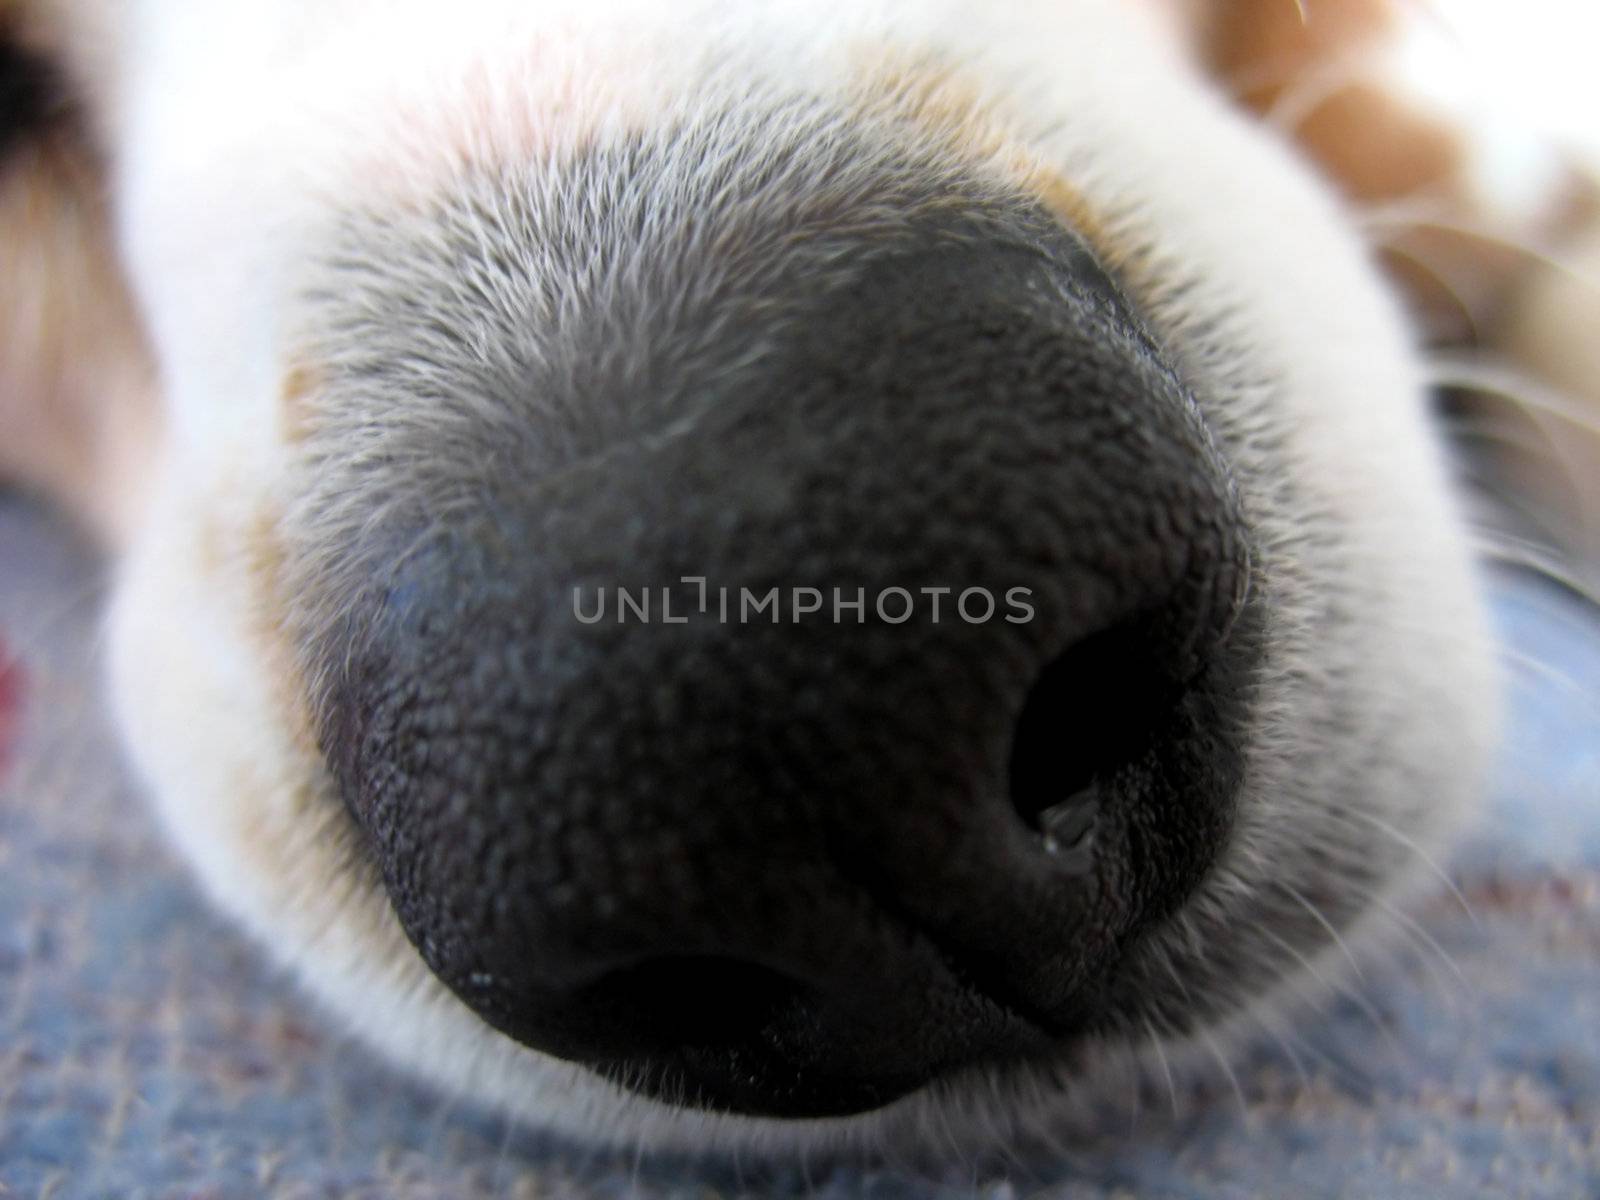 A macro shot of a beagle dog's nose.